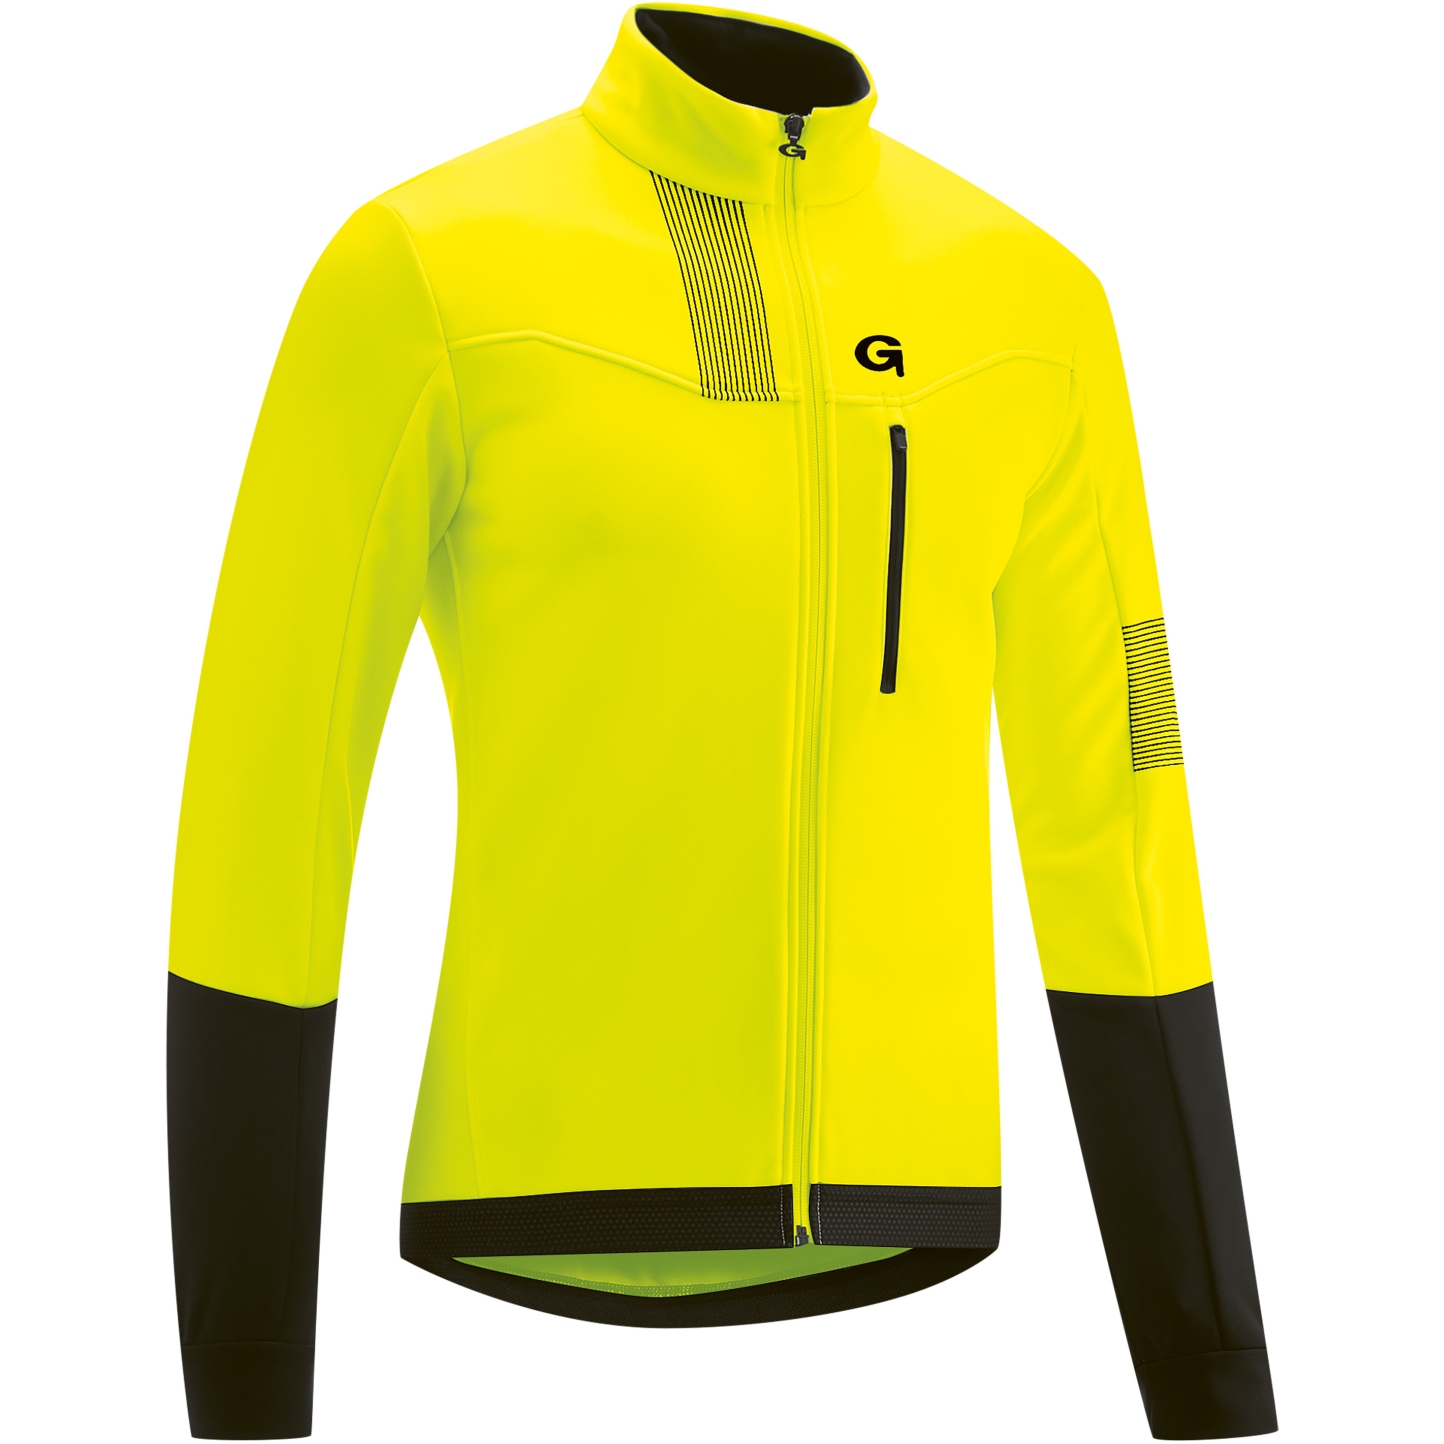 Produktbild von Gonso Valaff Softshell-Fahrradjacke Herren - Safety Yellow/Black